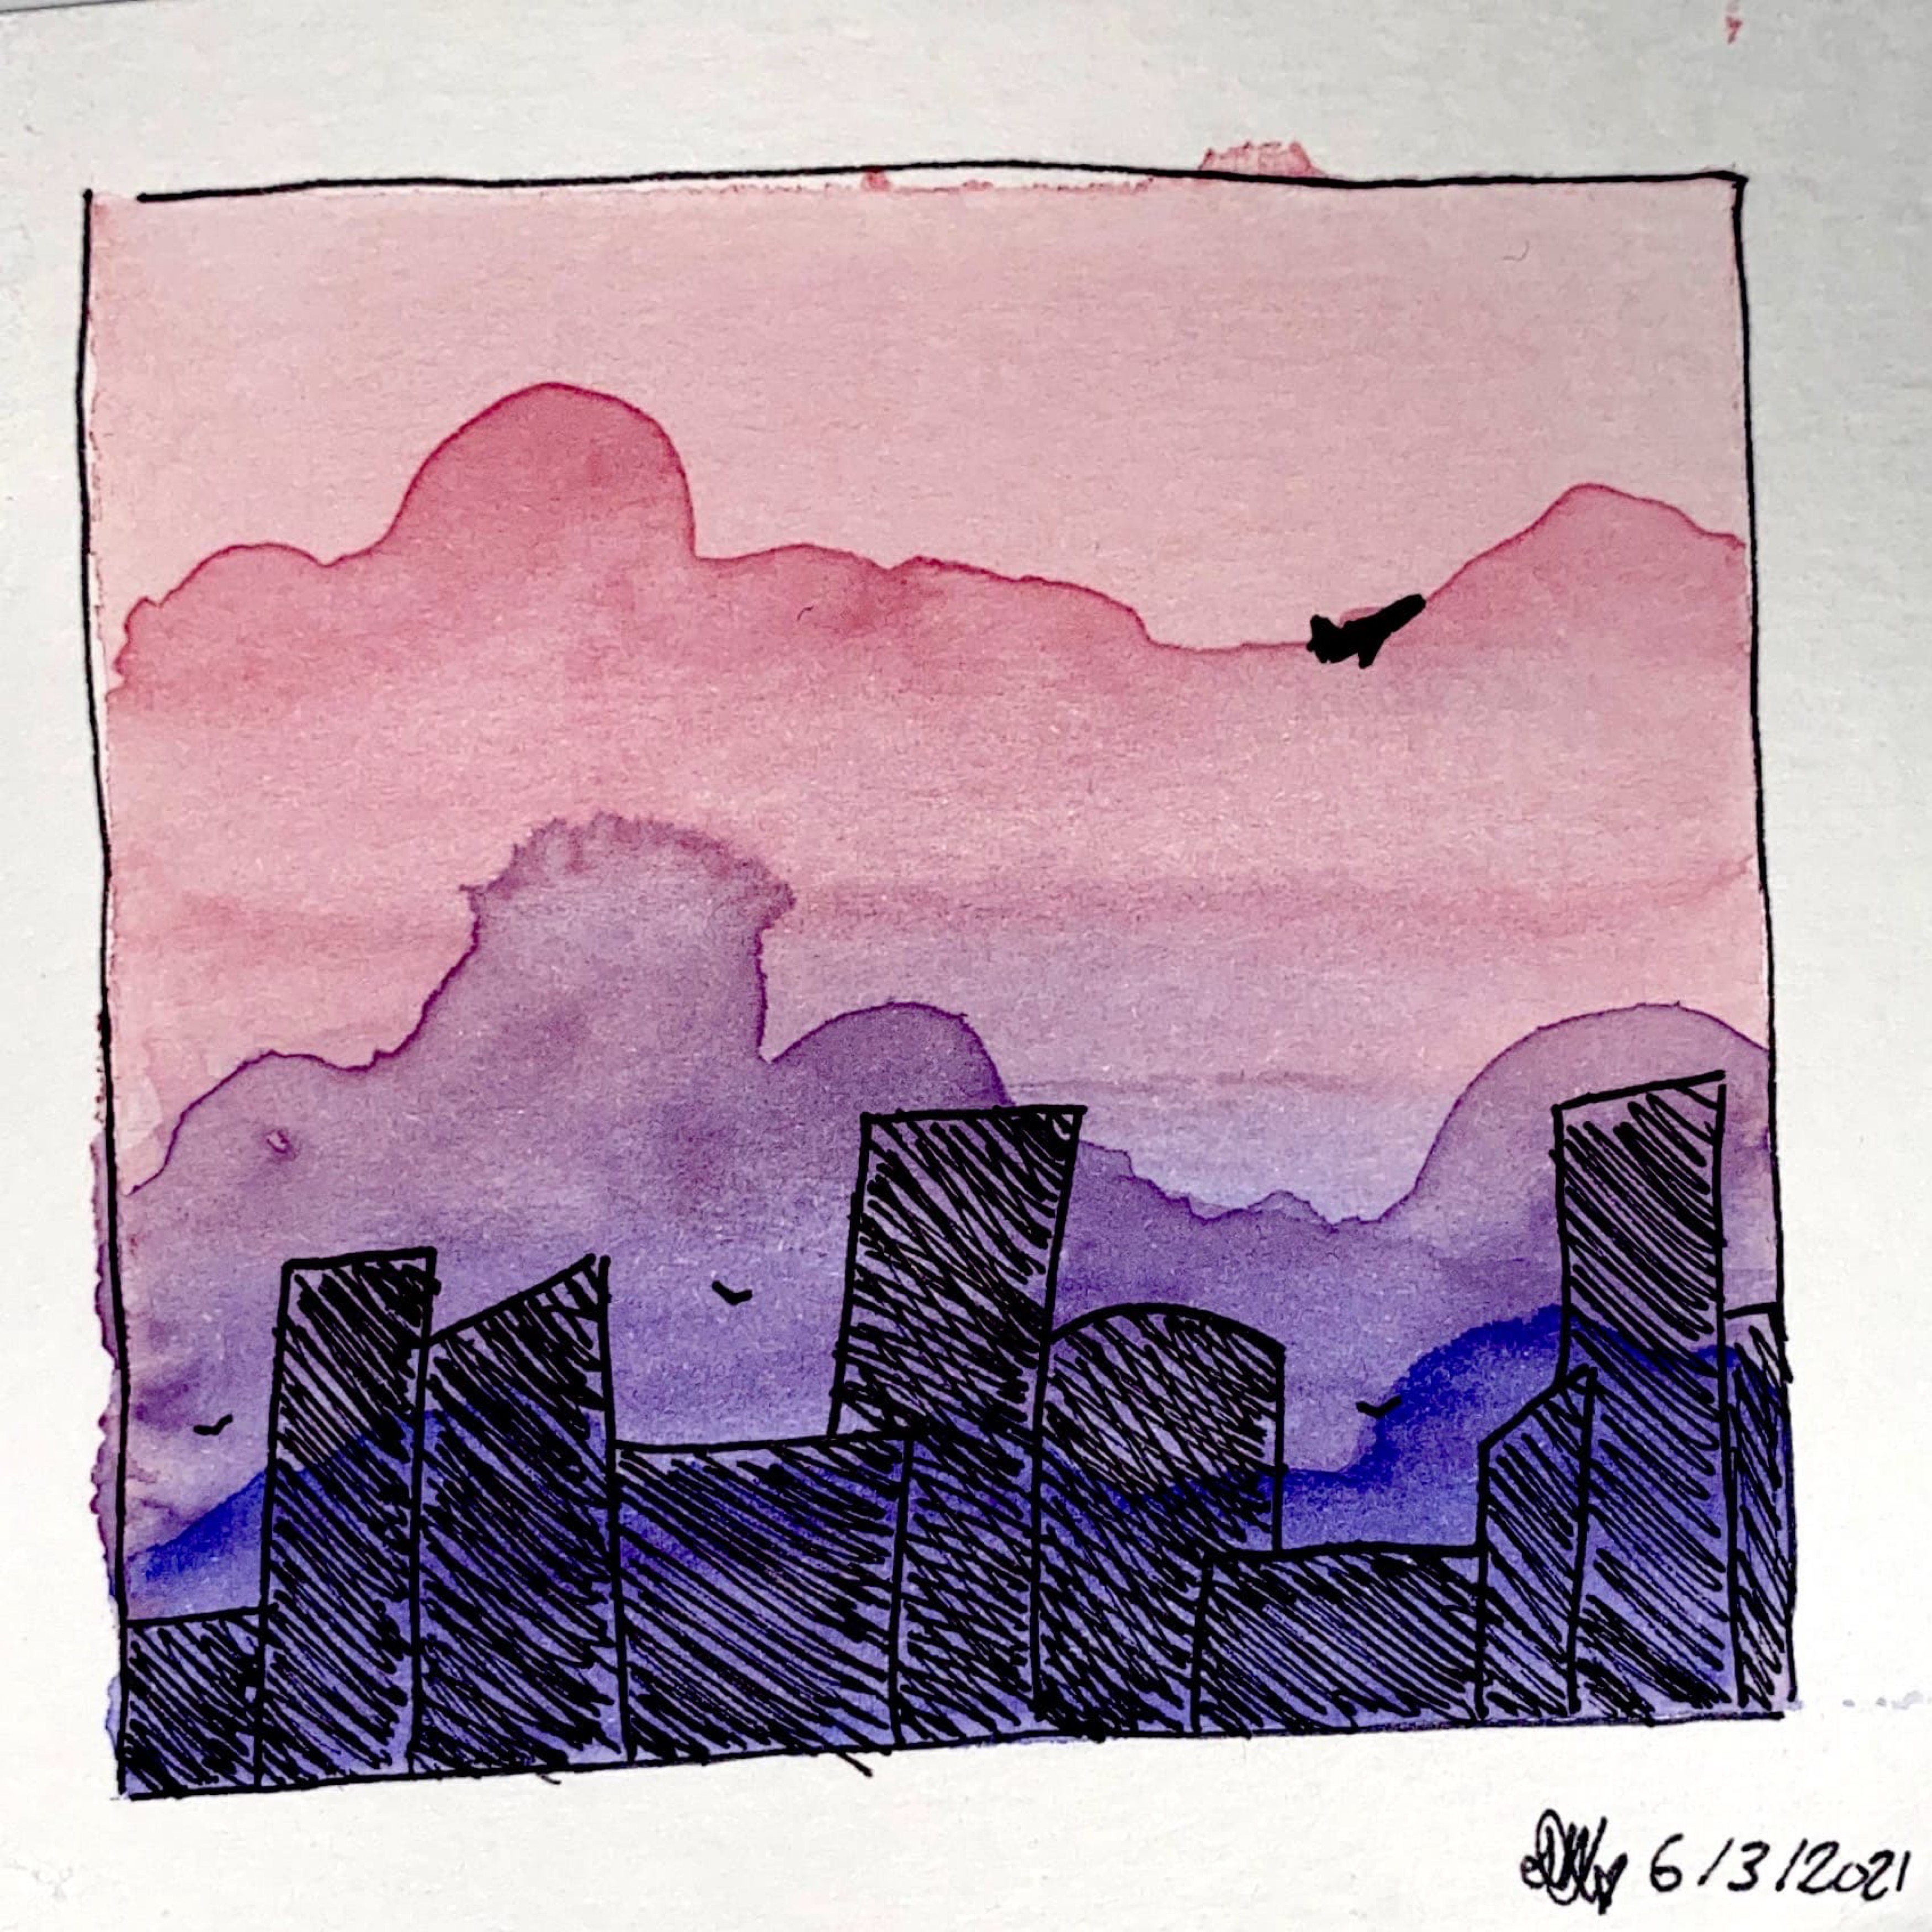 a pink sunset over a city skyline